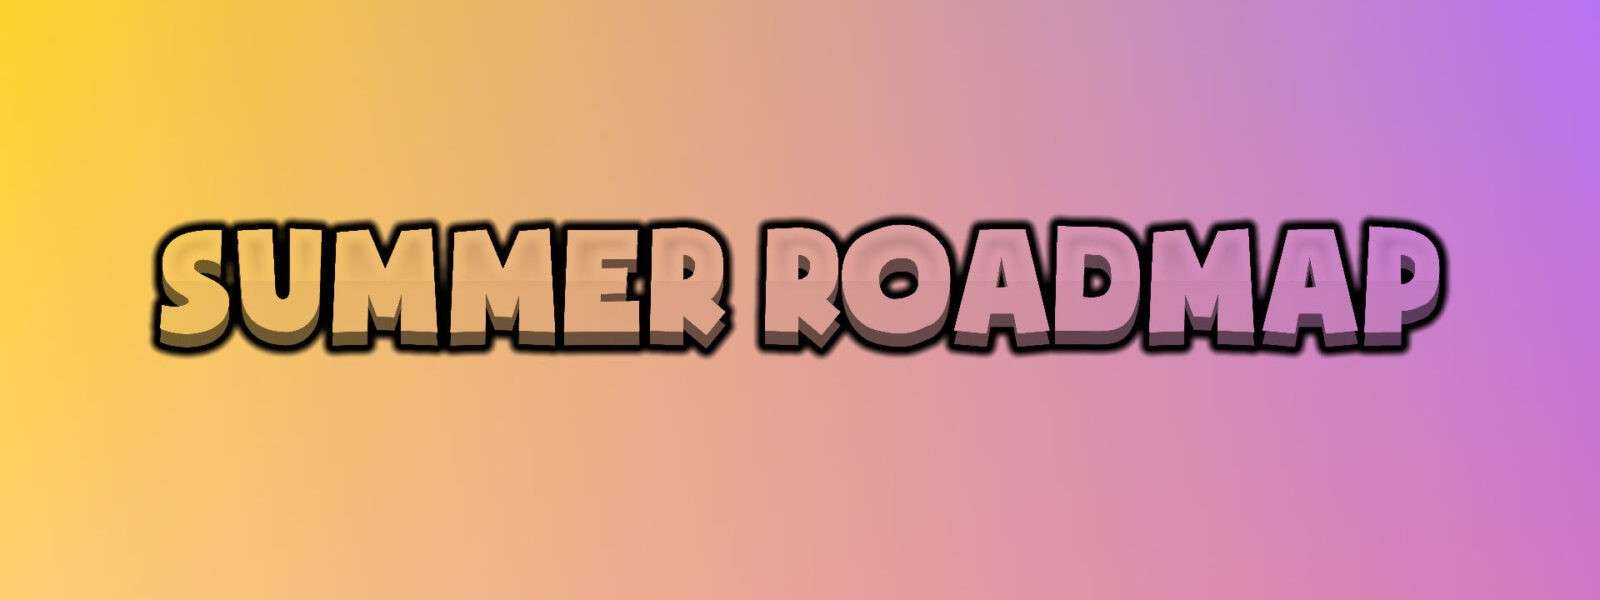 Summer 2021 Roadmap